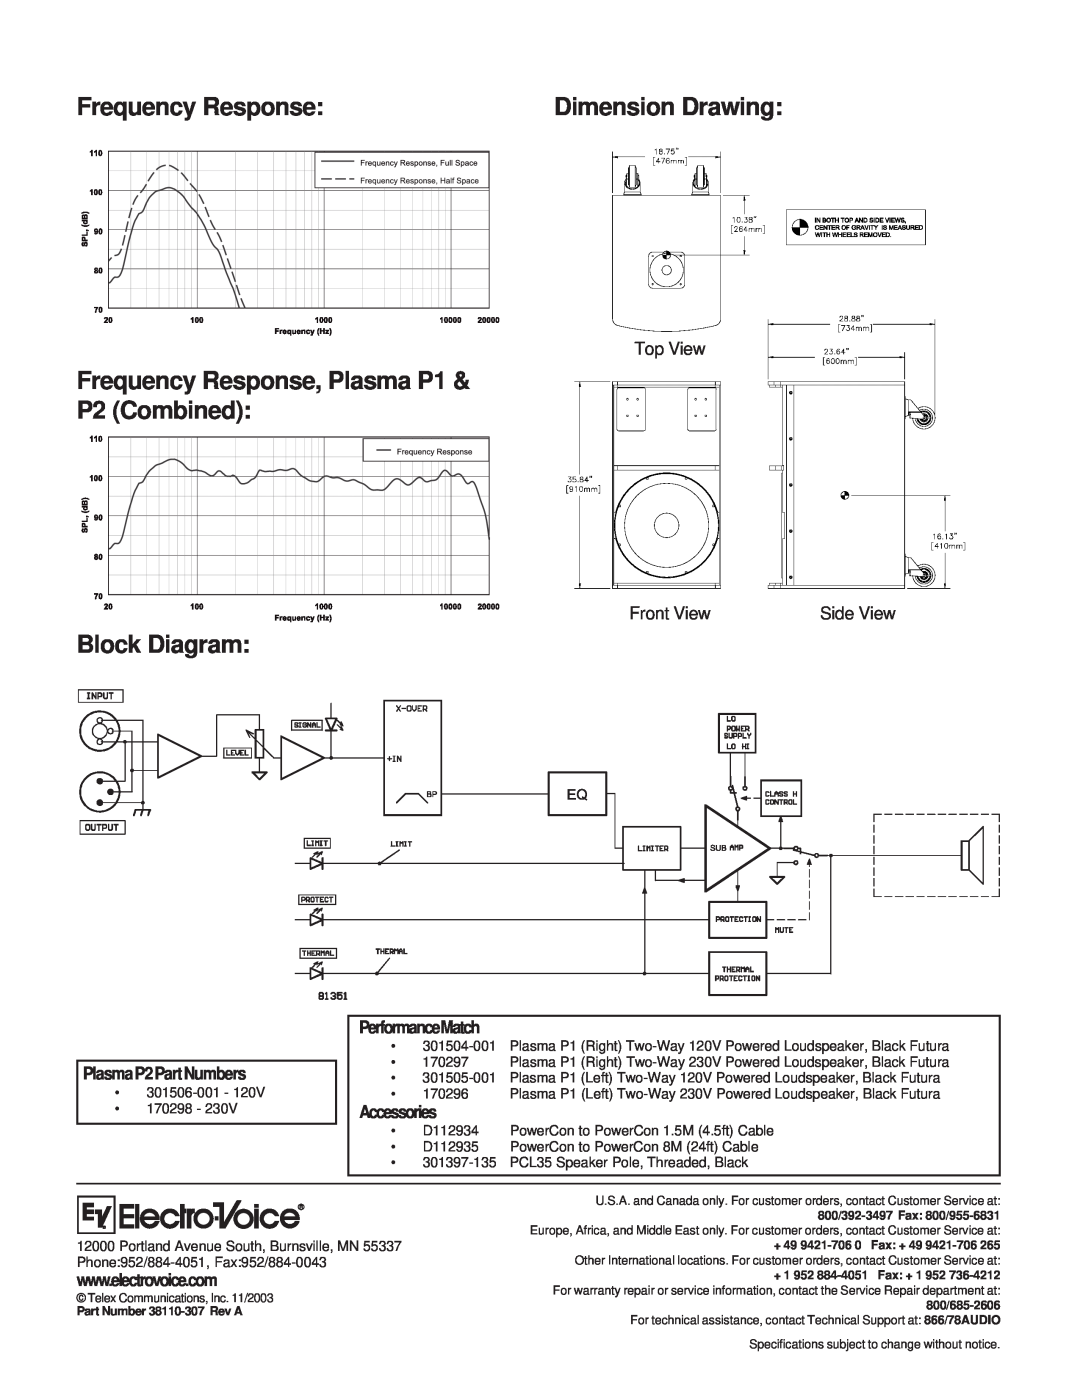 Electro-Voice Plasma P2 Frequency Response, Plasma P1 & P2 Combined, Block Diagram, PlasmaP2PartNumbers, Accessories 